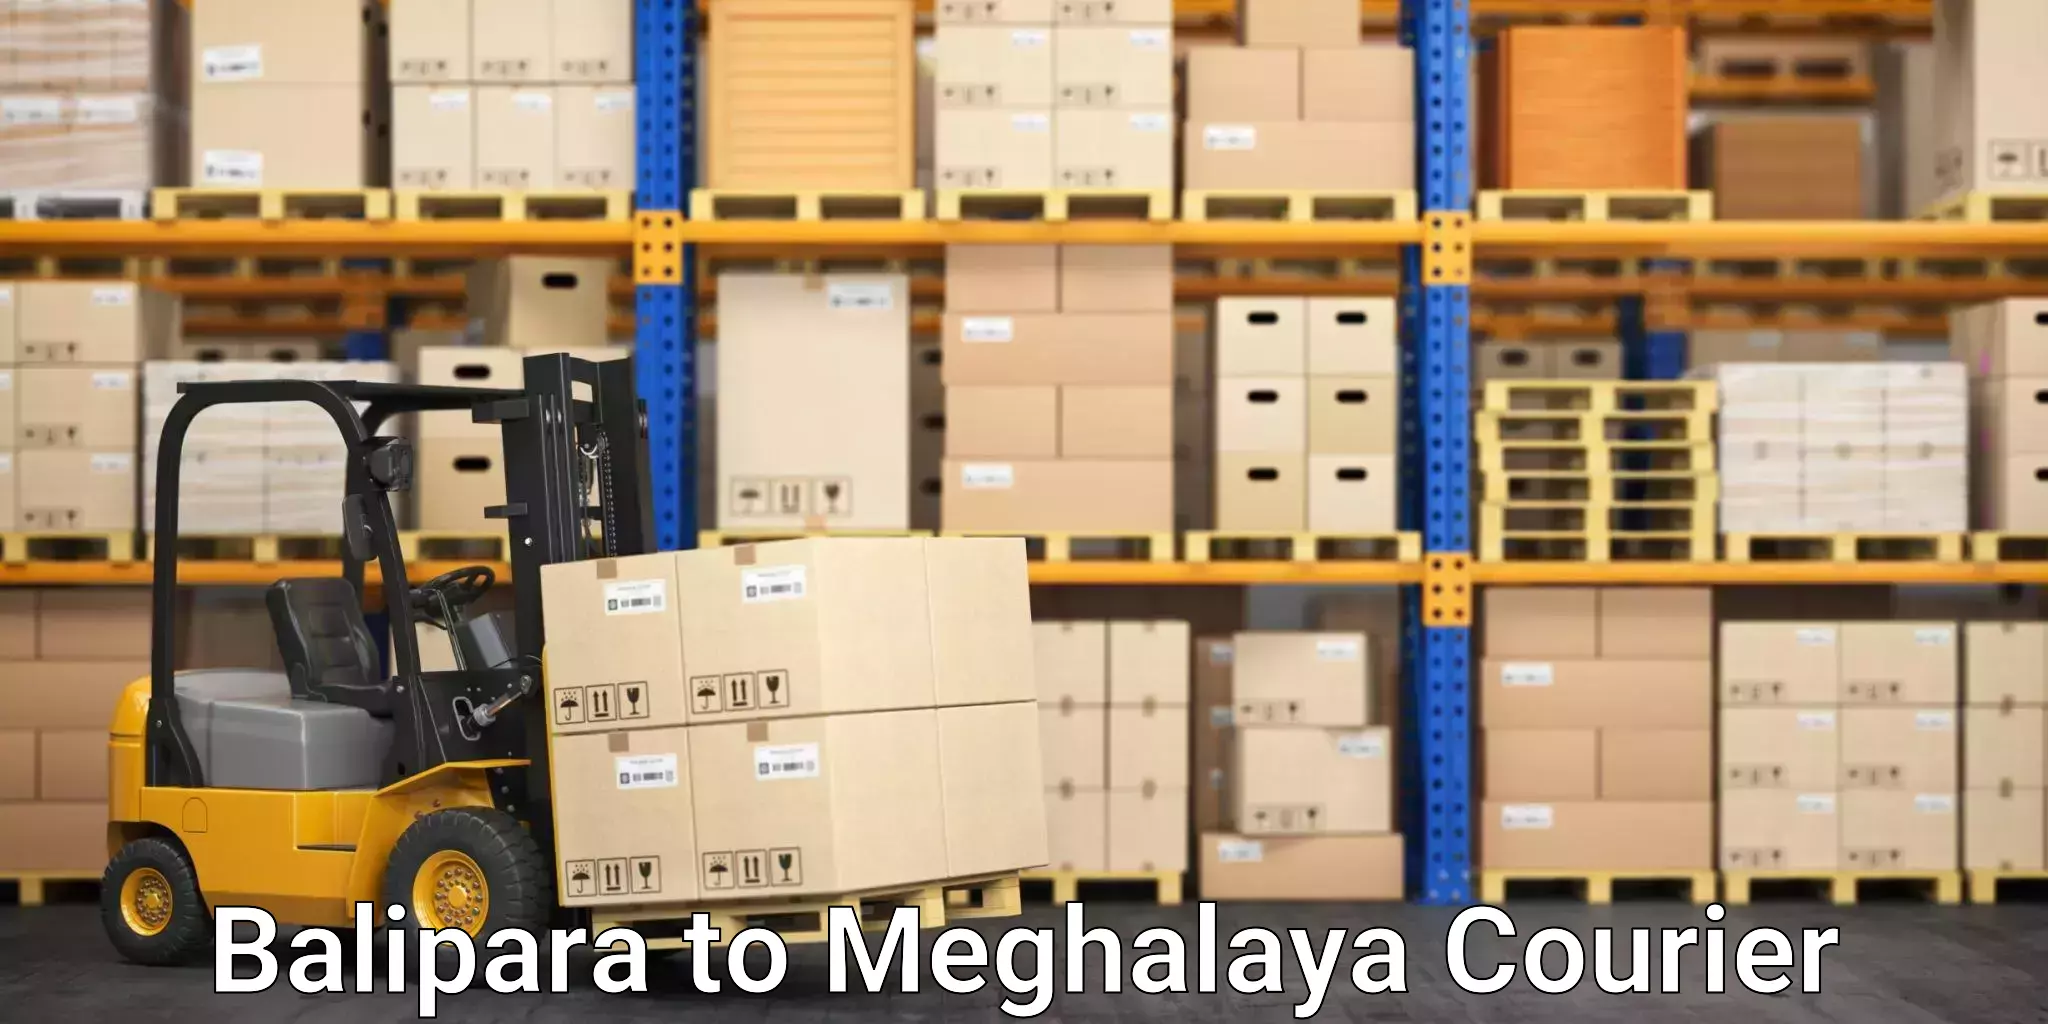 Advanced courier platforms Balipara to Meghalaya